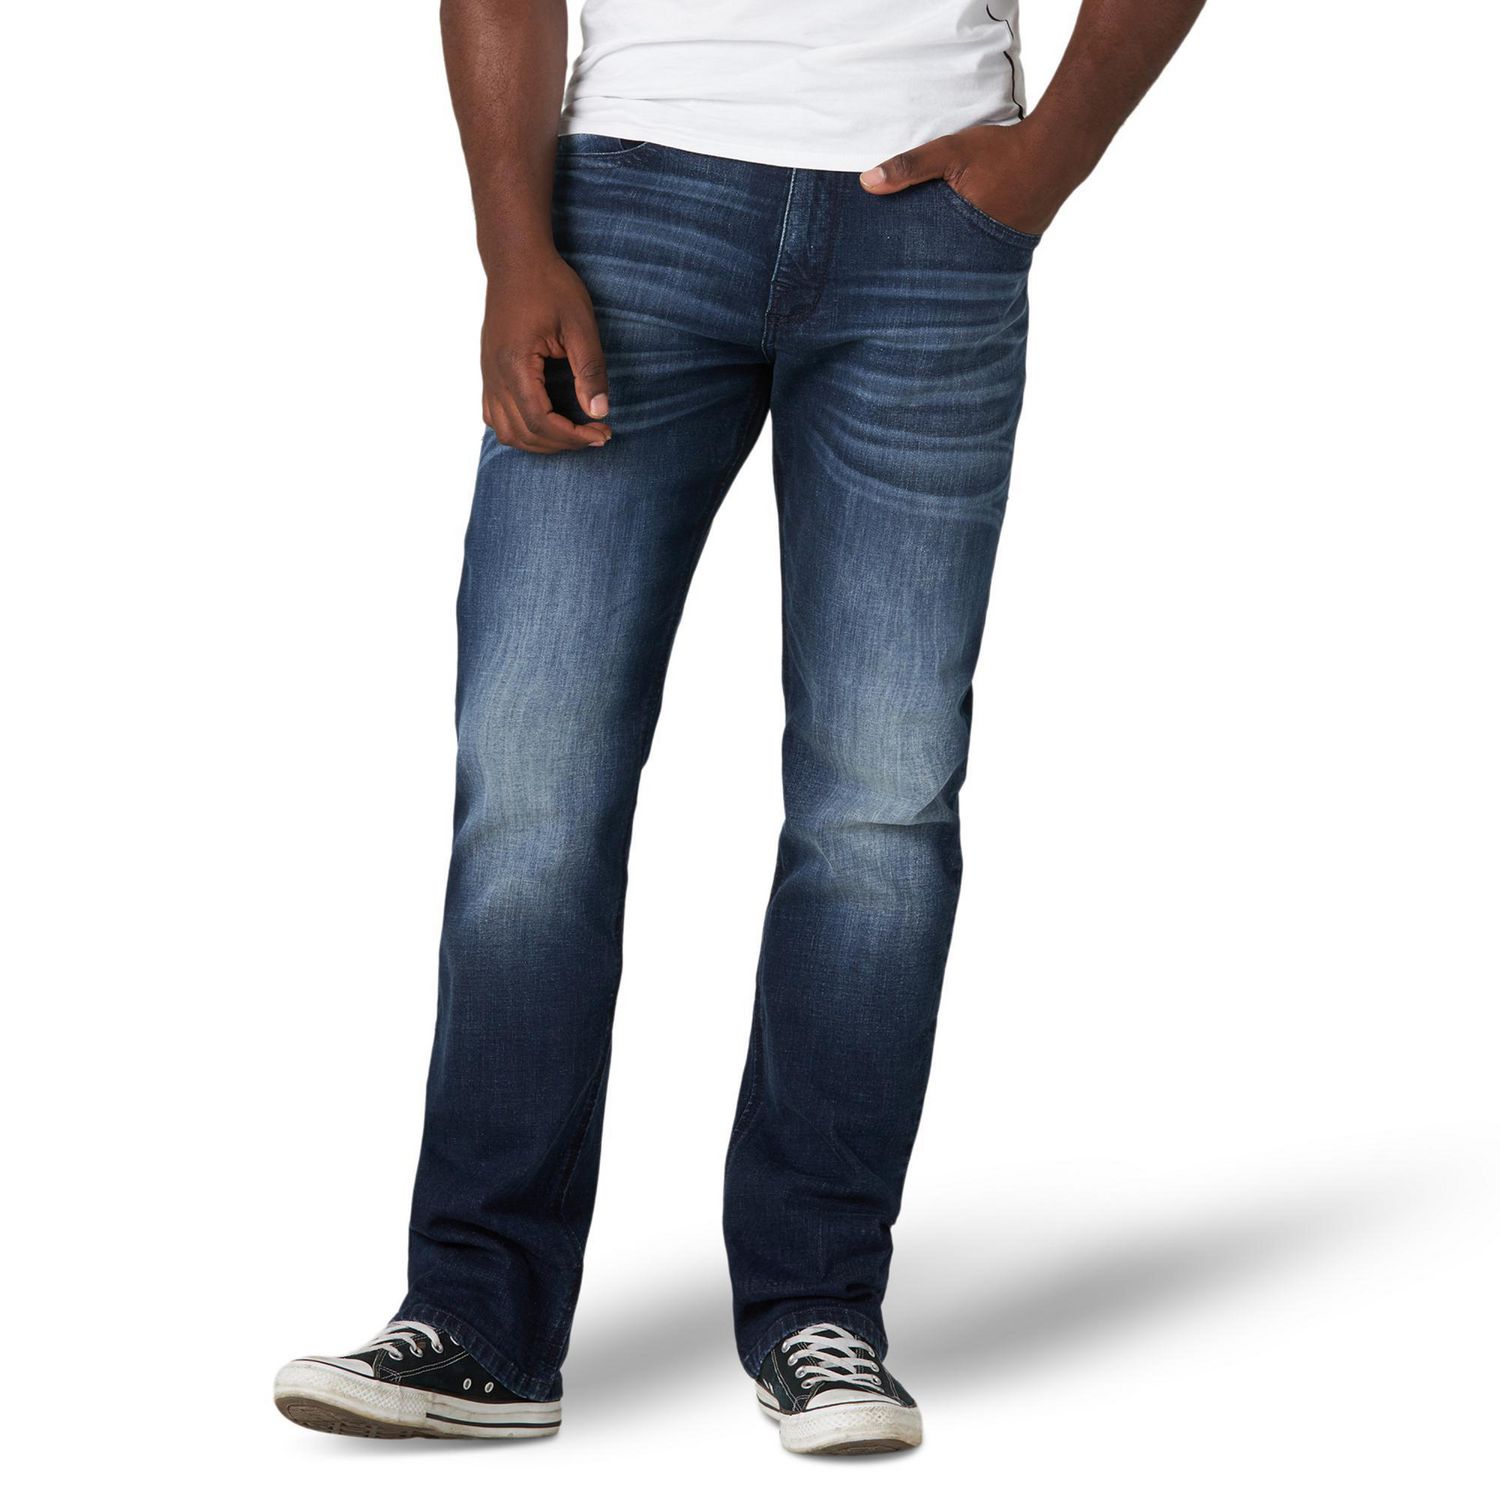 Buy Premium Jeans for Men at great price - North Republic